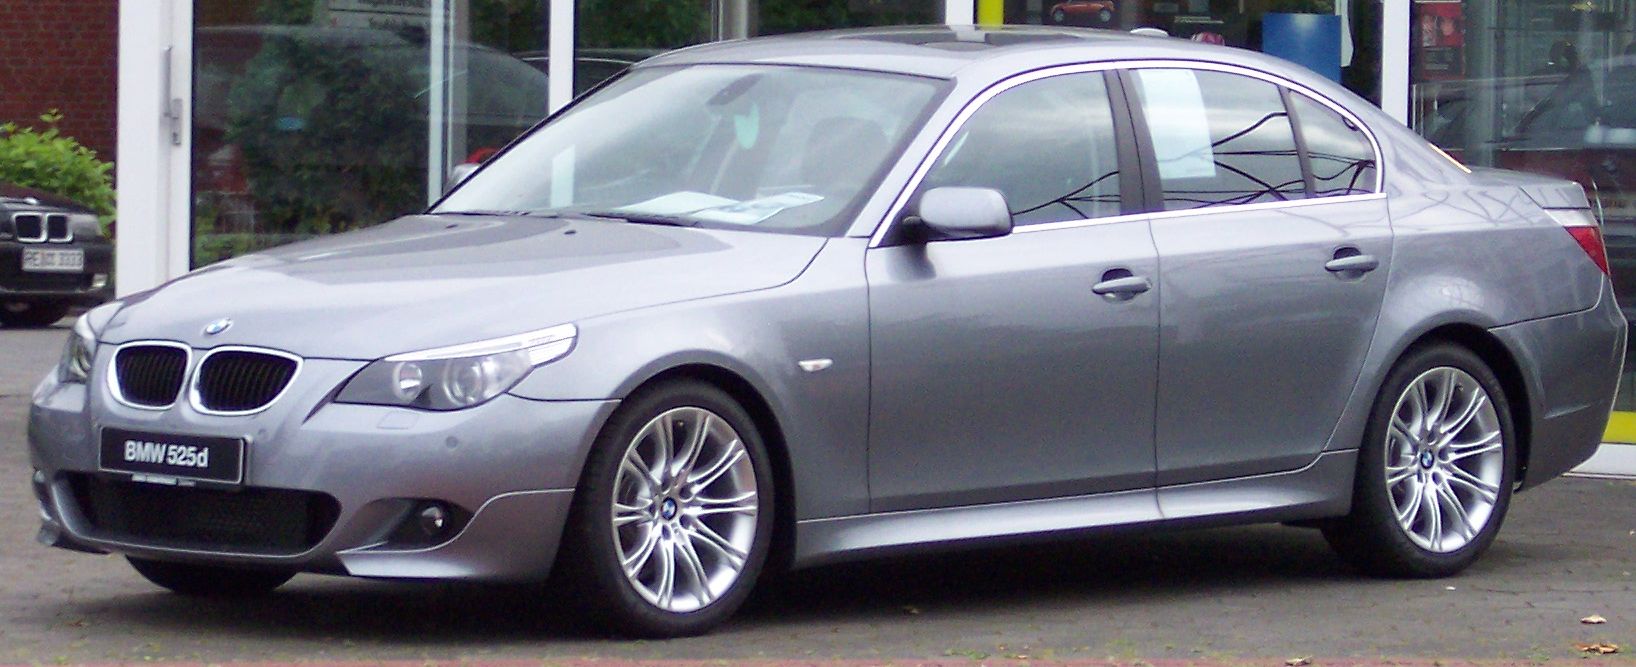 File:BMW Series5 silver vl.jpg